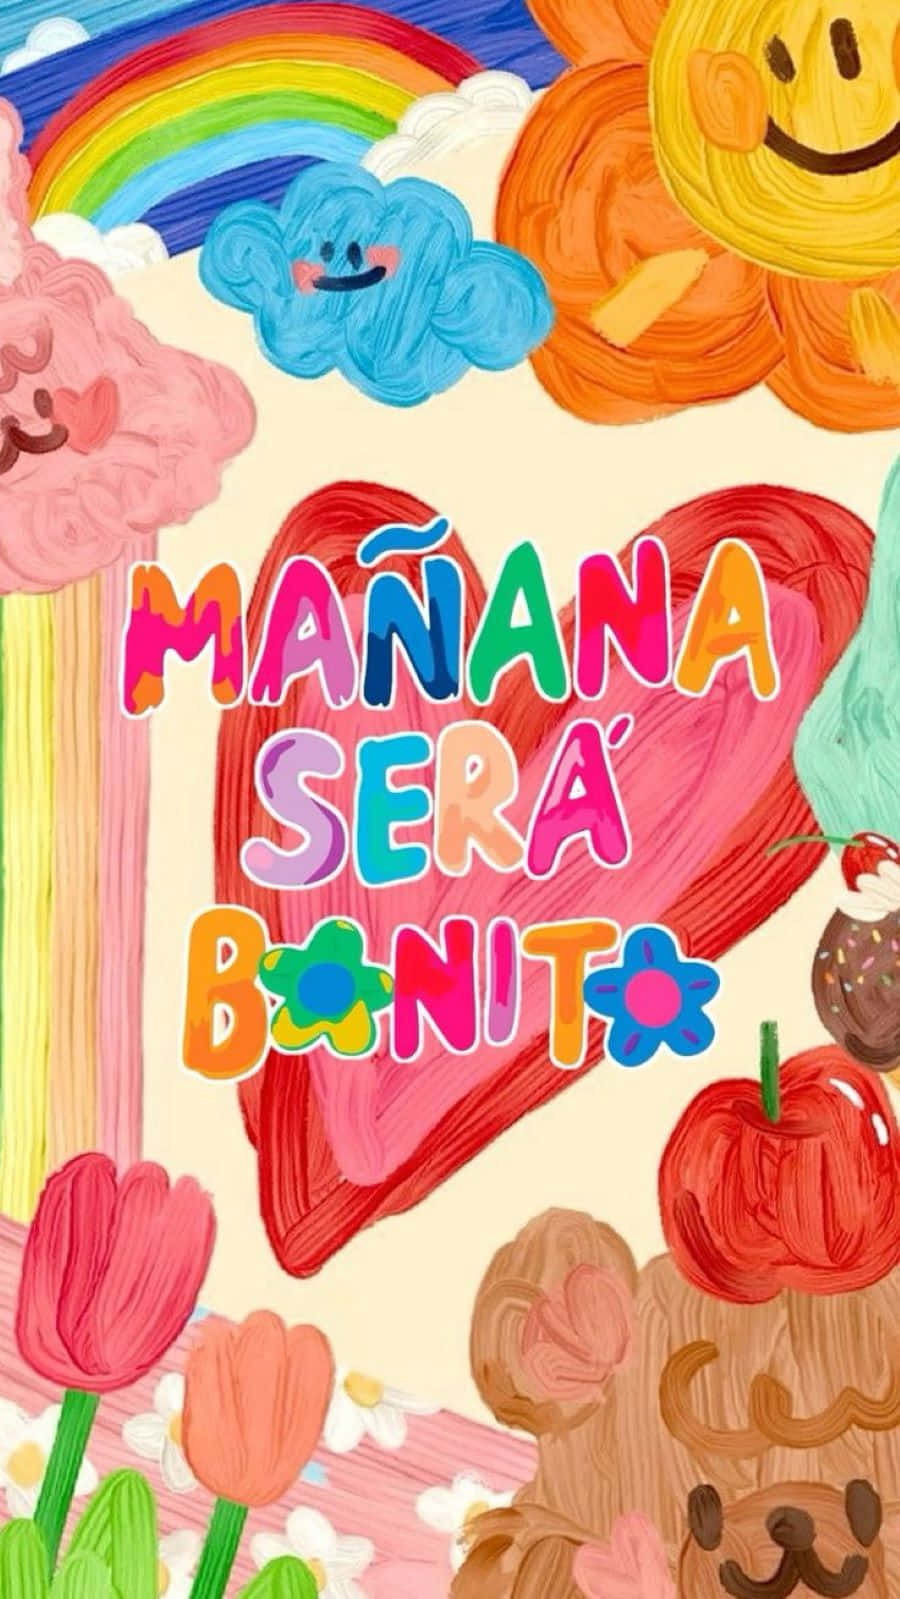 Manana Sera Bonito Cover Art Wallpaper